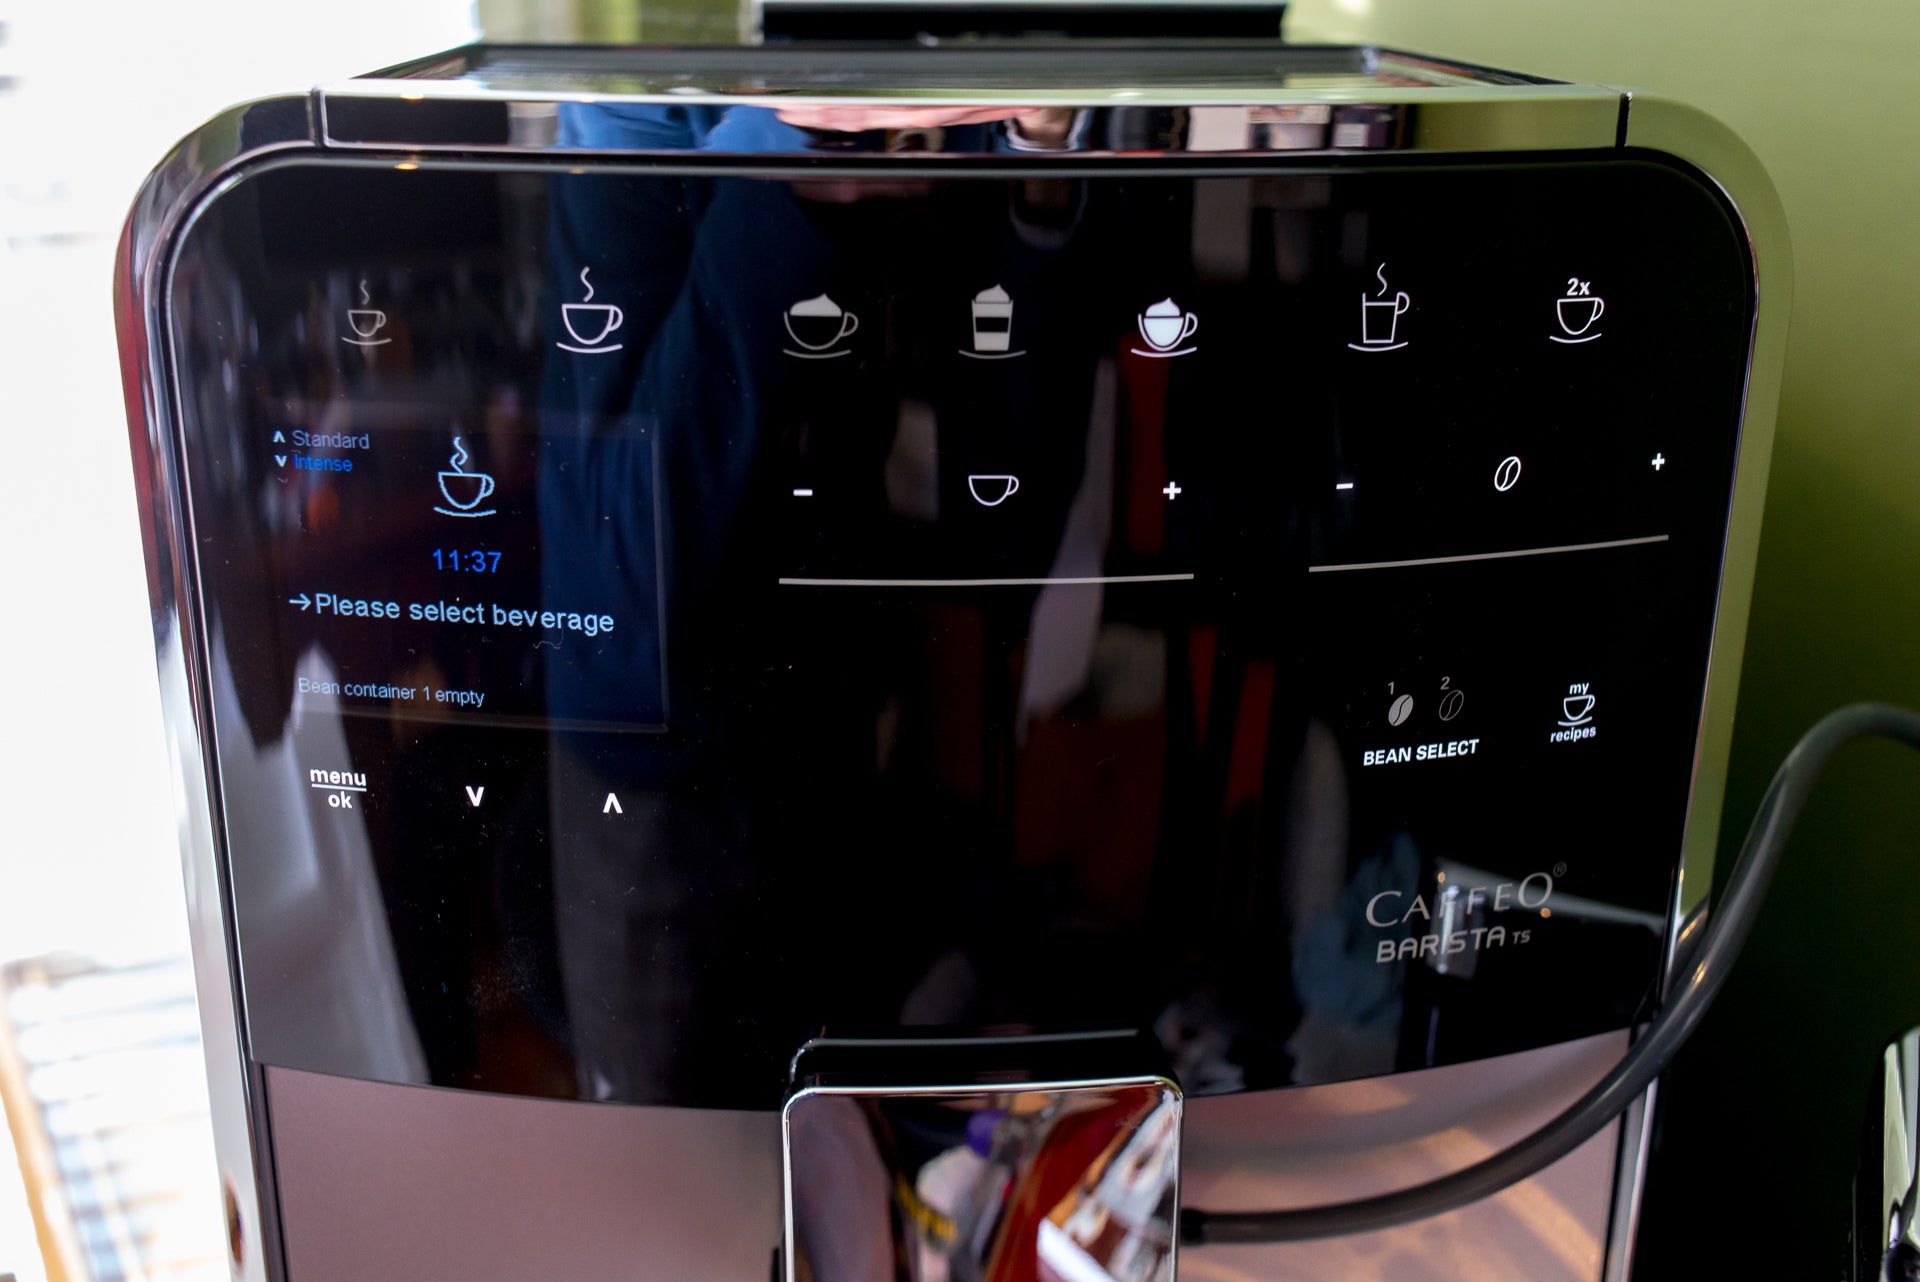 Melitta Caffeo Barista TS Smart coffee machine touchscreen display.